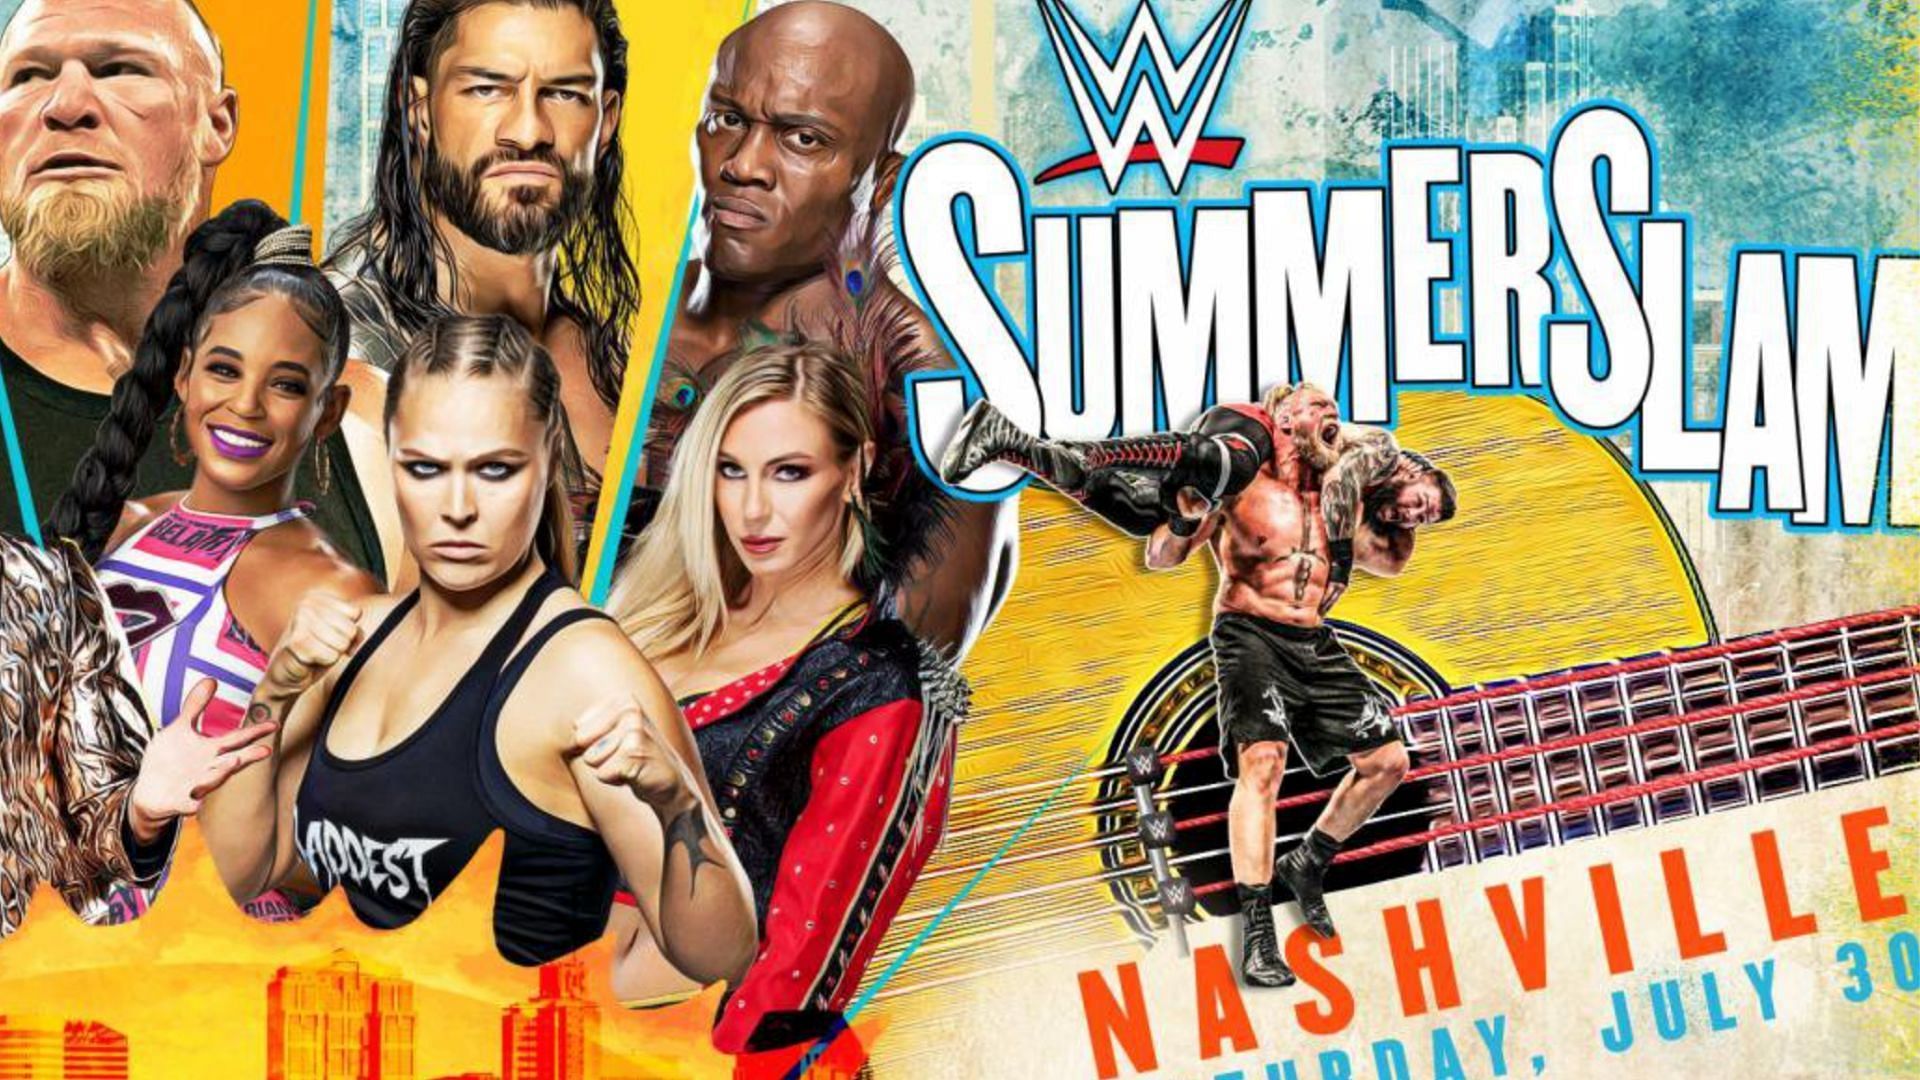 WWE SummerSlam 2022 will air tonight from Nashville